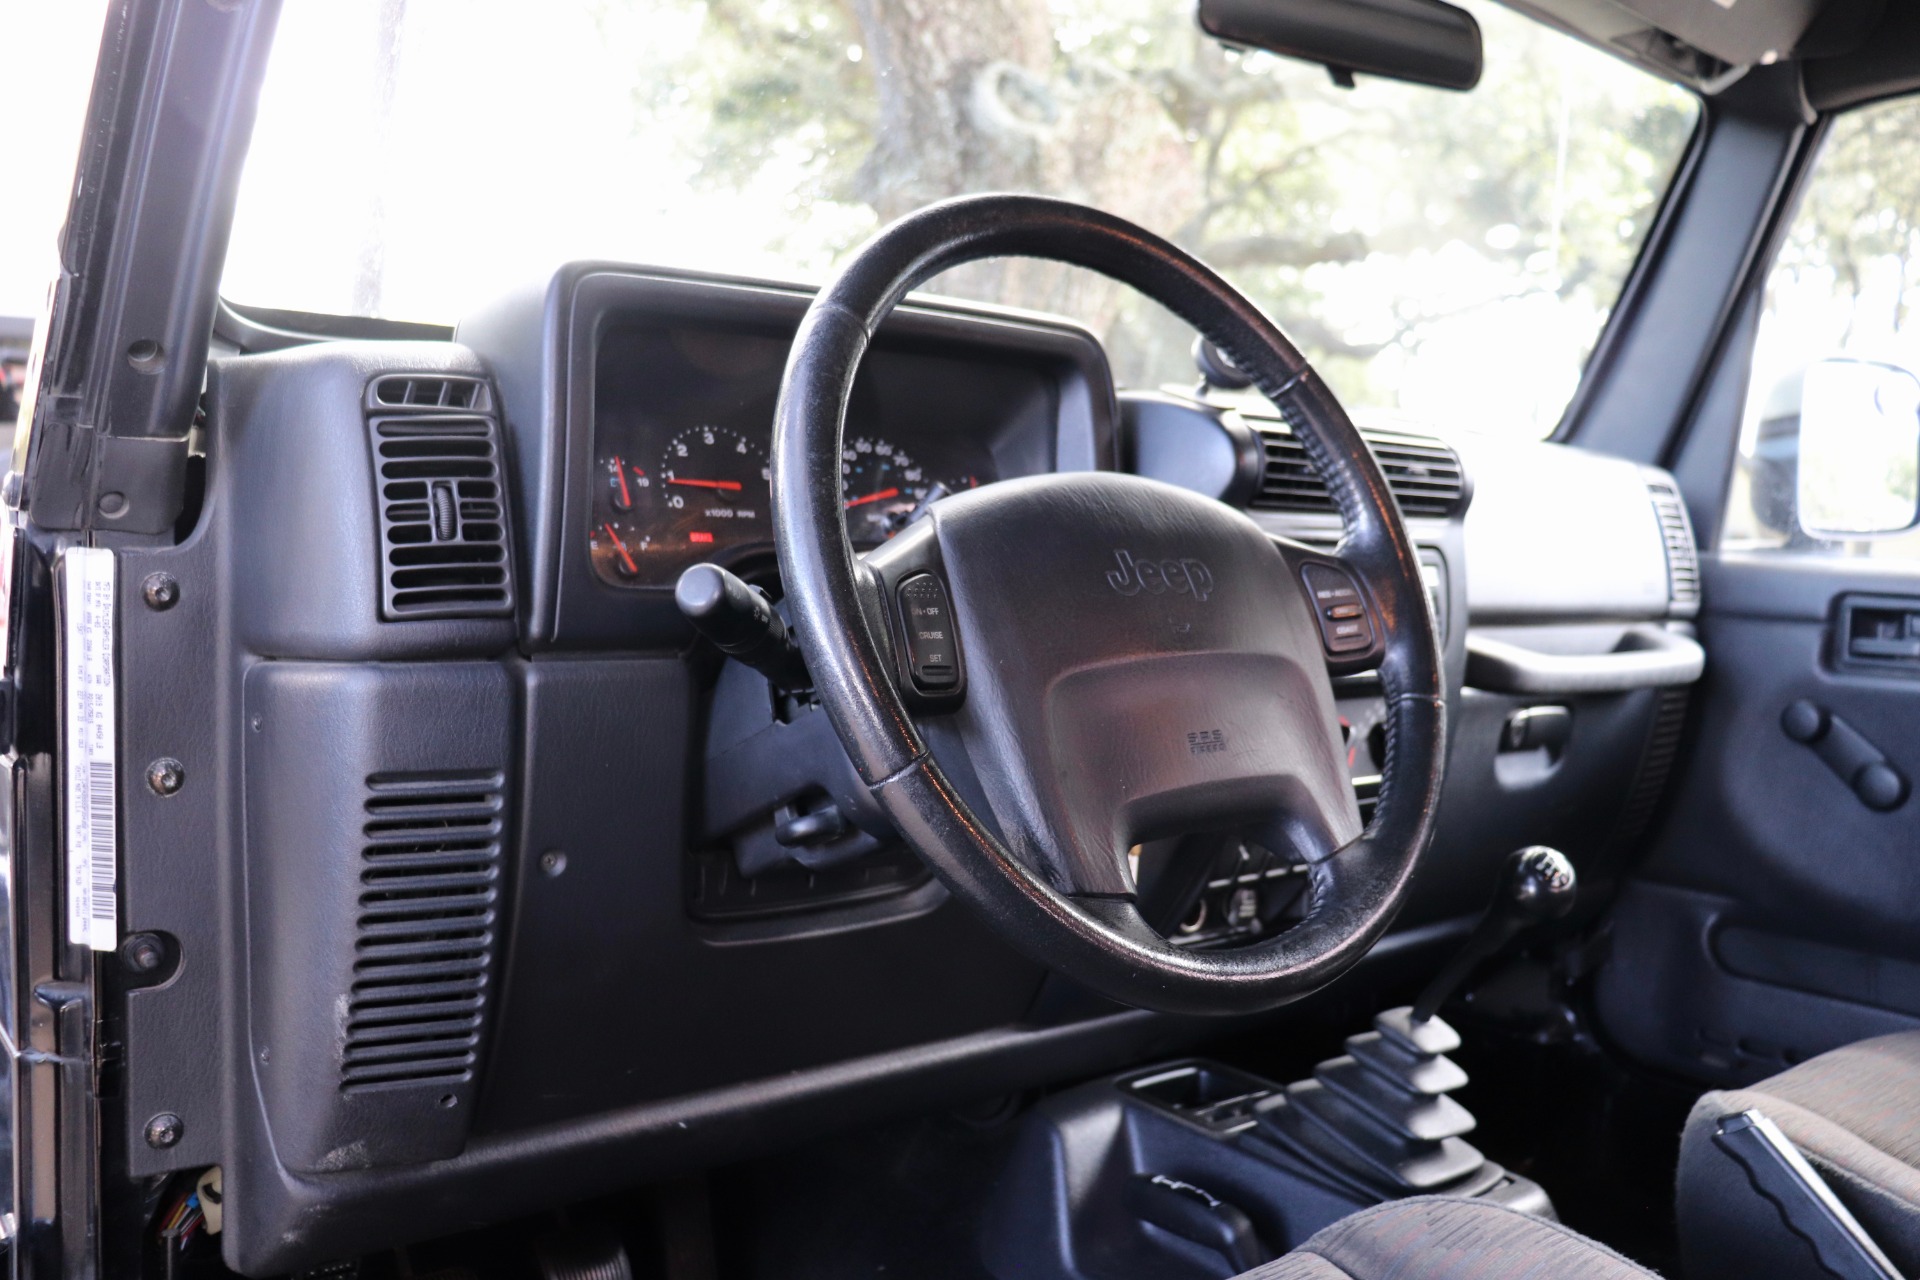 Used-2003-Jeep-Wrangler-X-Freedom-Edition